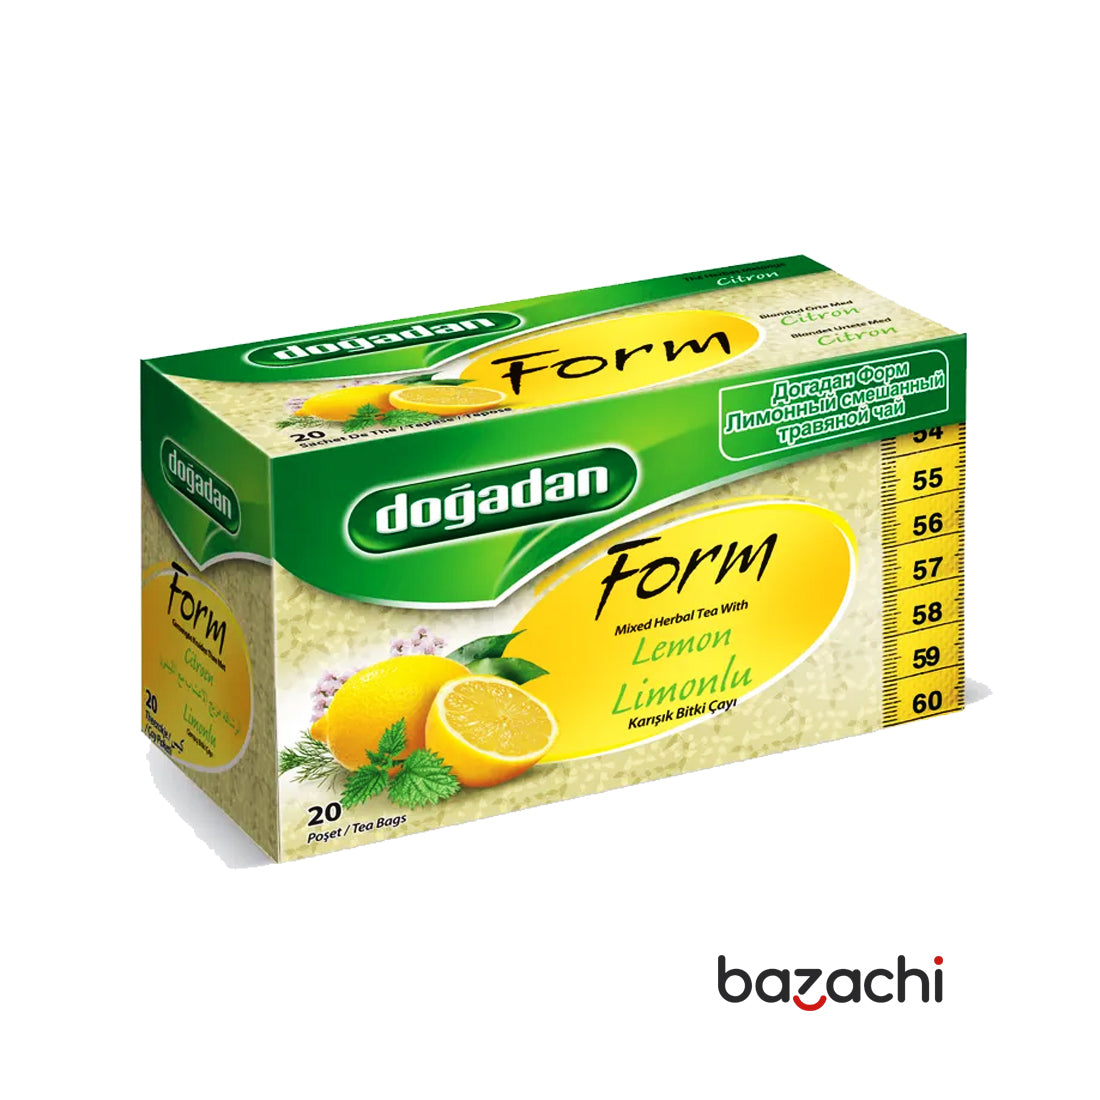 Dogadan Form Mixed Herbal Tea with Lemon Tea 20 Tea Bags